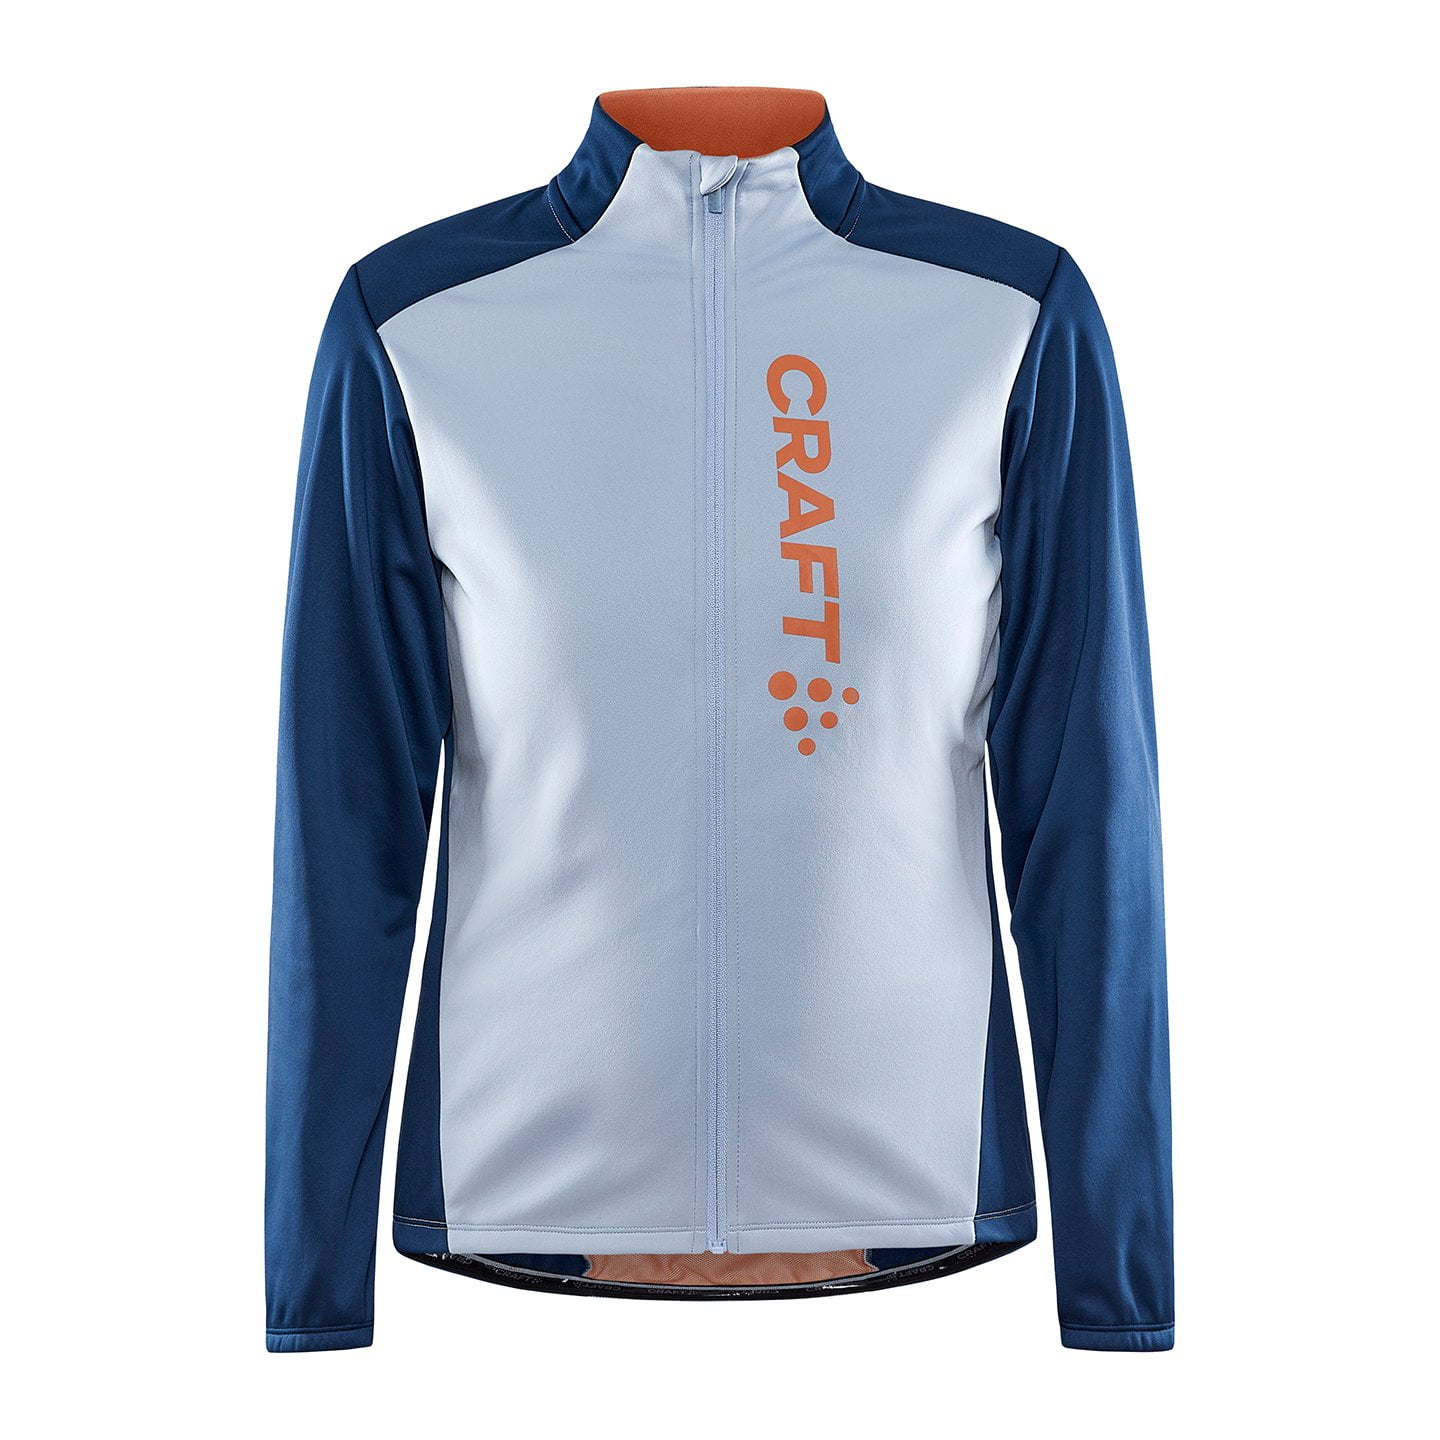 CRAFT CORE SubZ Women’s Winter Jacket Women’s Thermal Jacket, size M, Cycle jacket, Cycling clothing